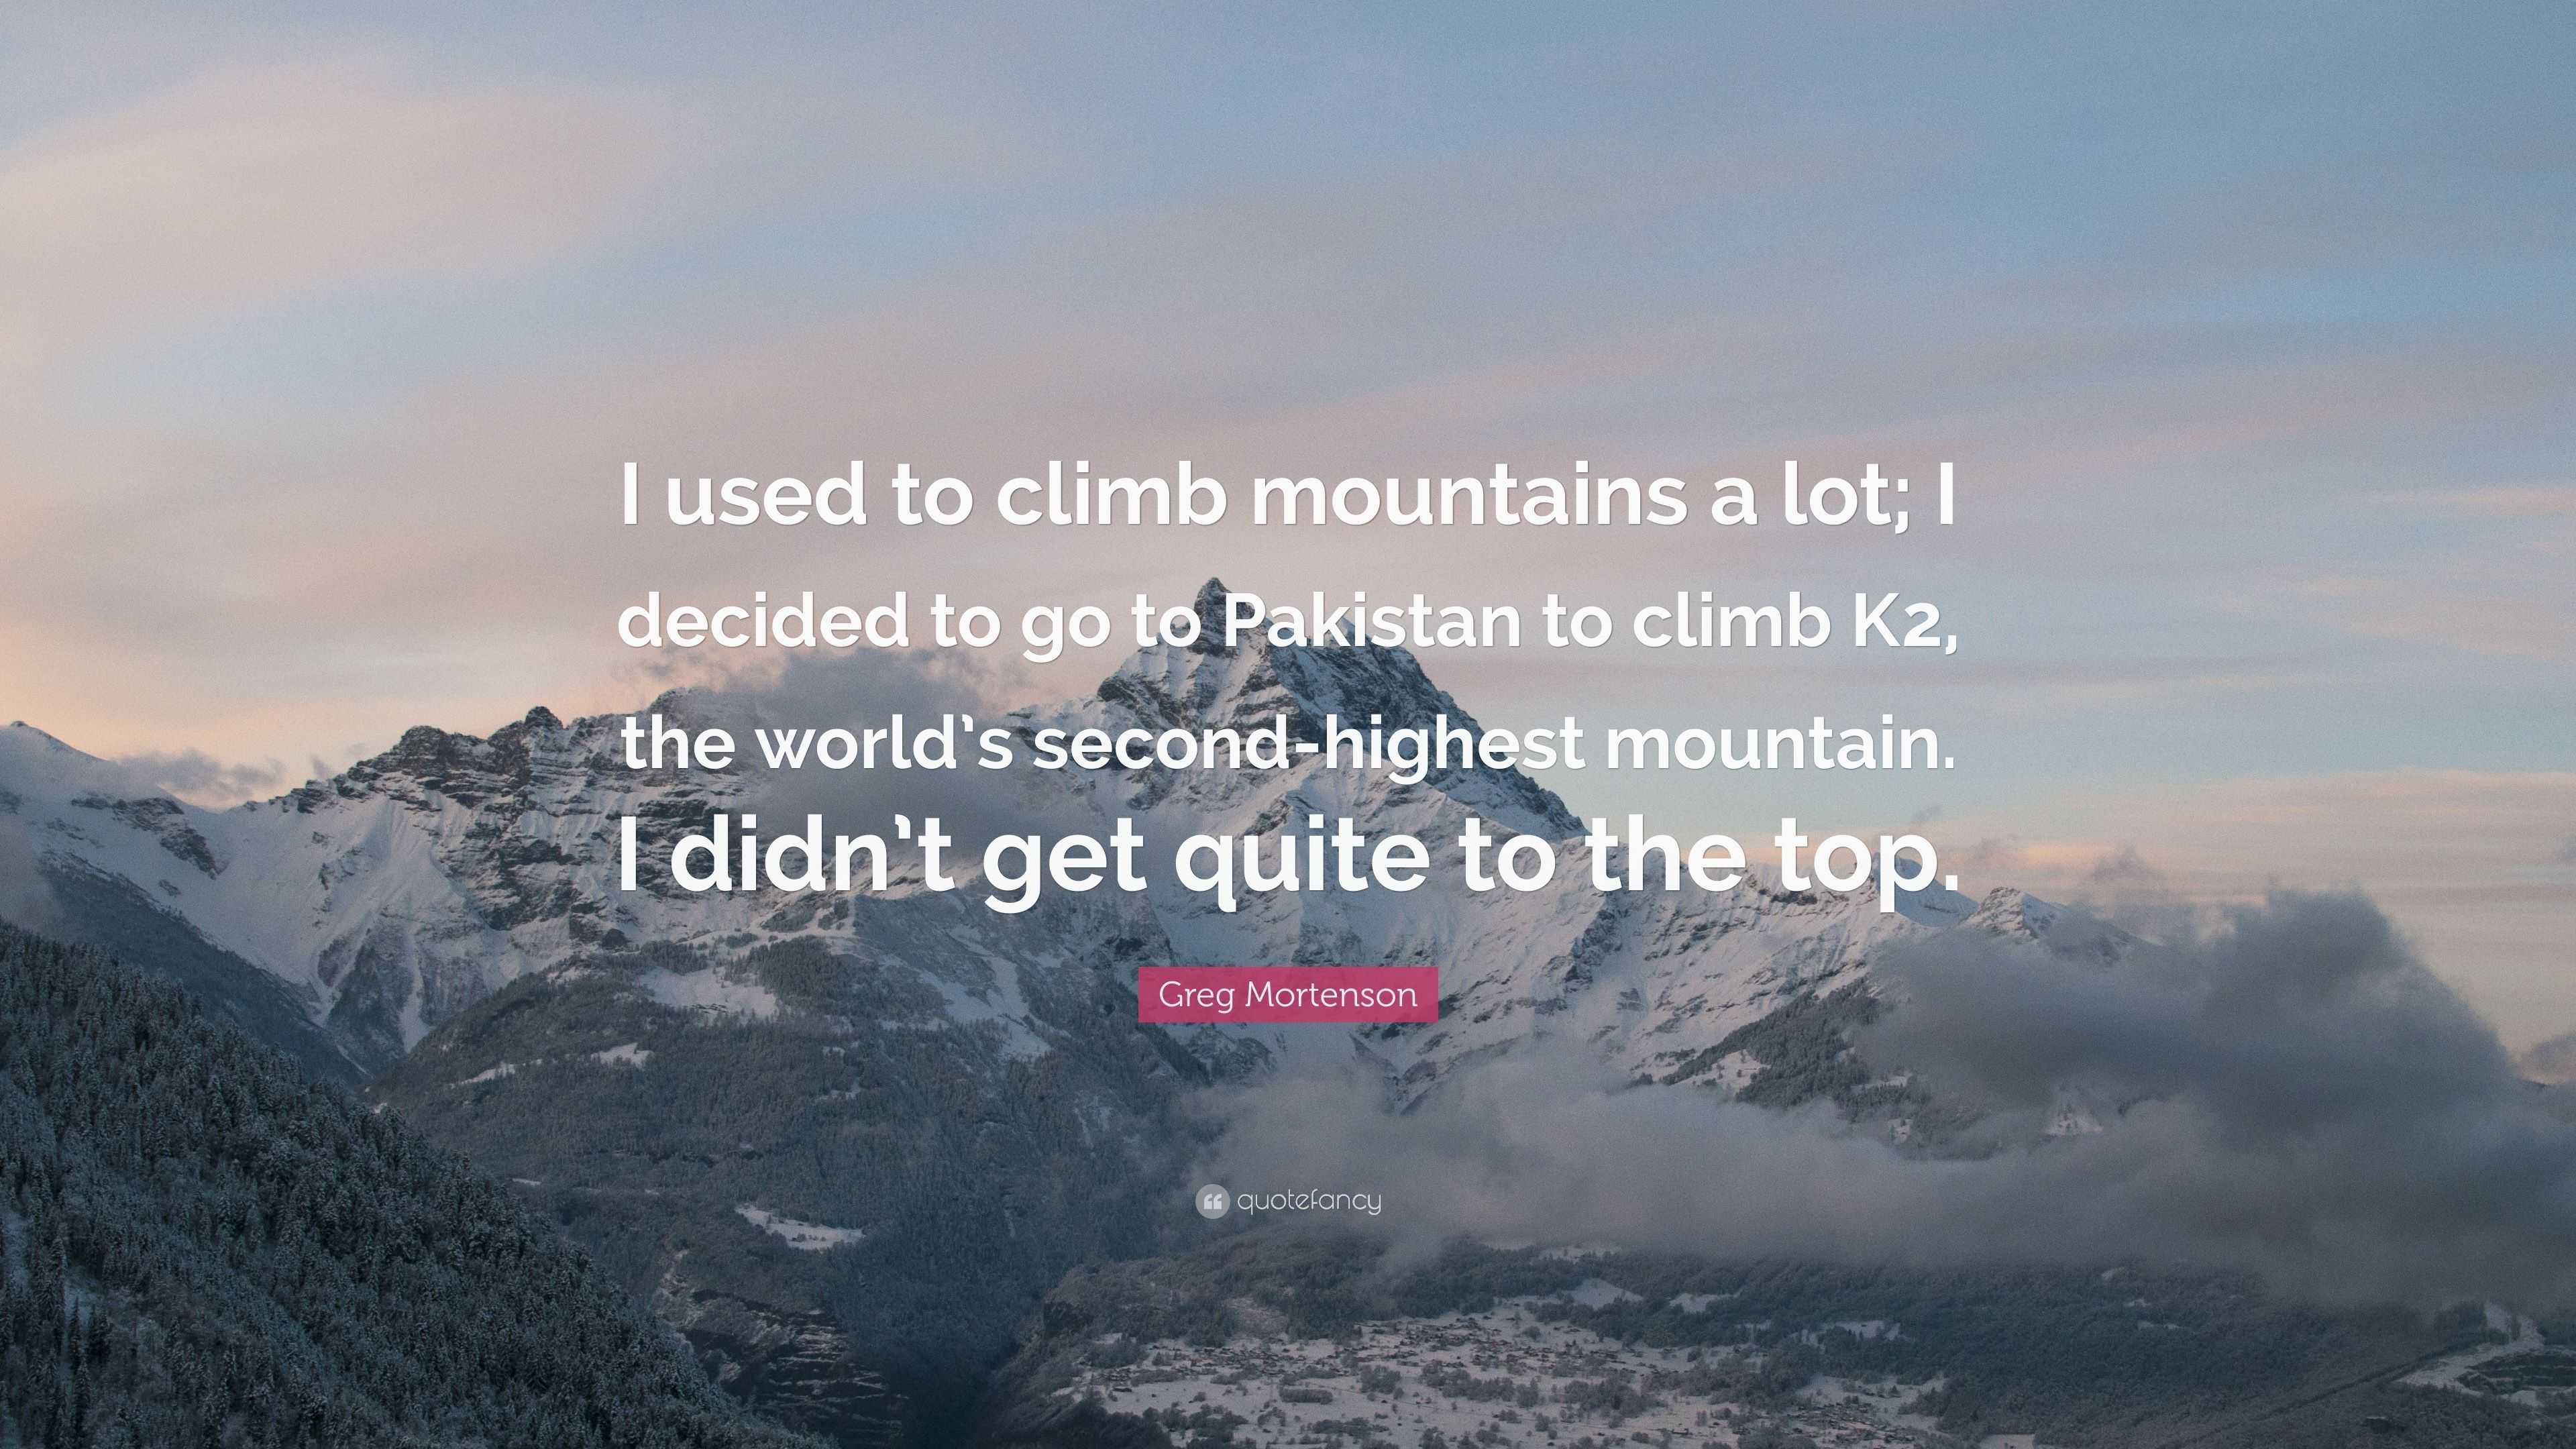 Greg Mortenson Quote: “I used to climb